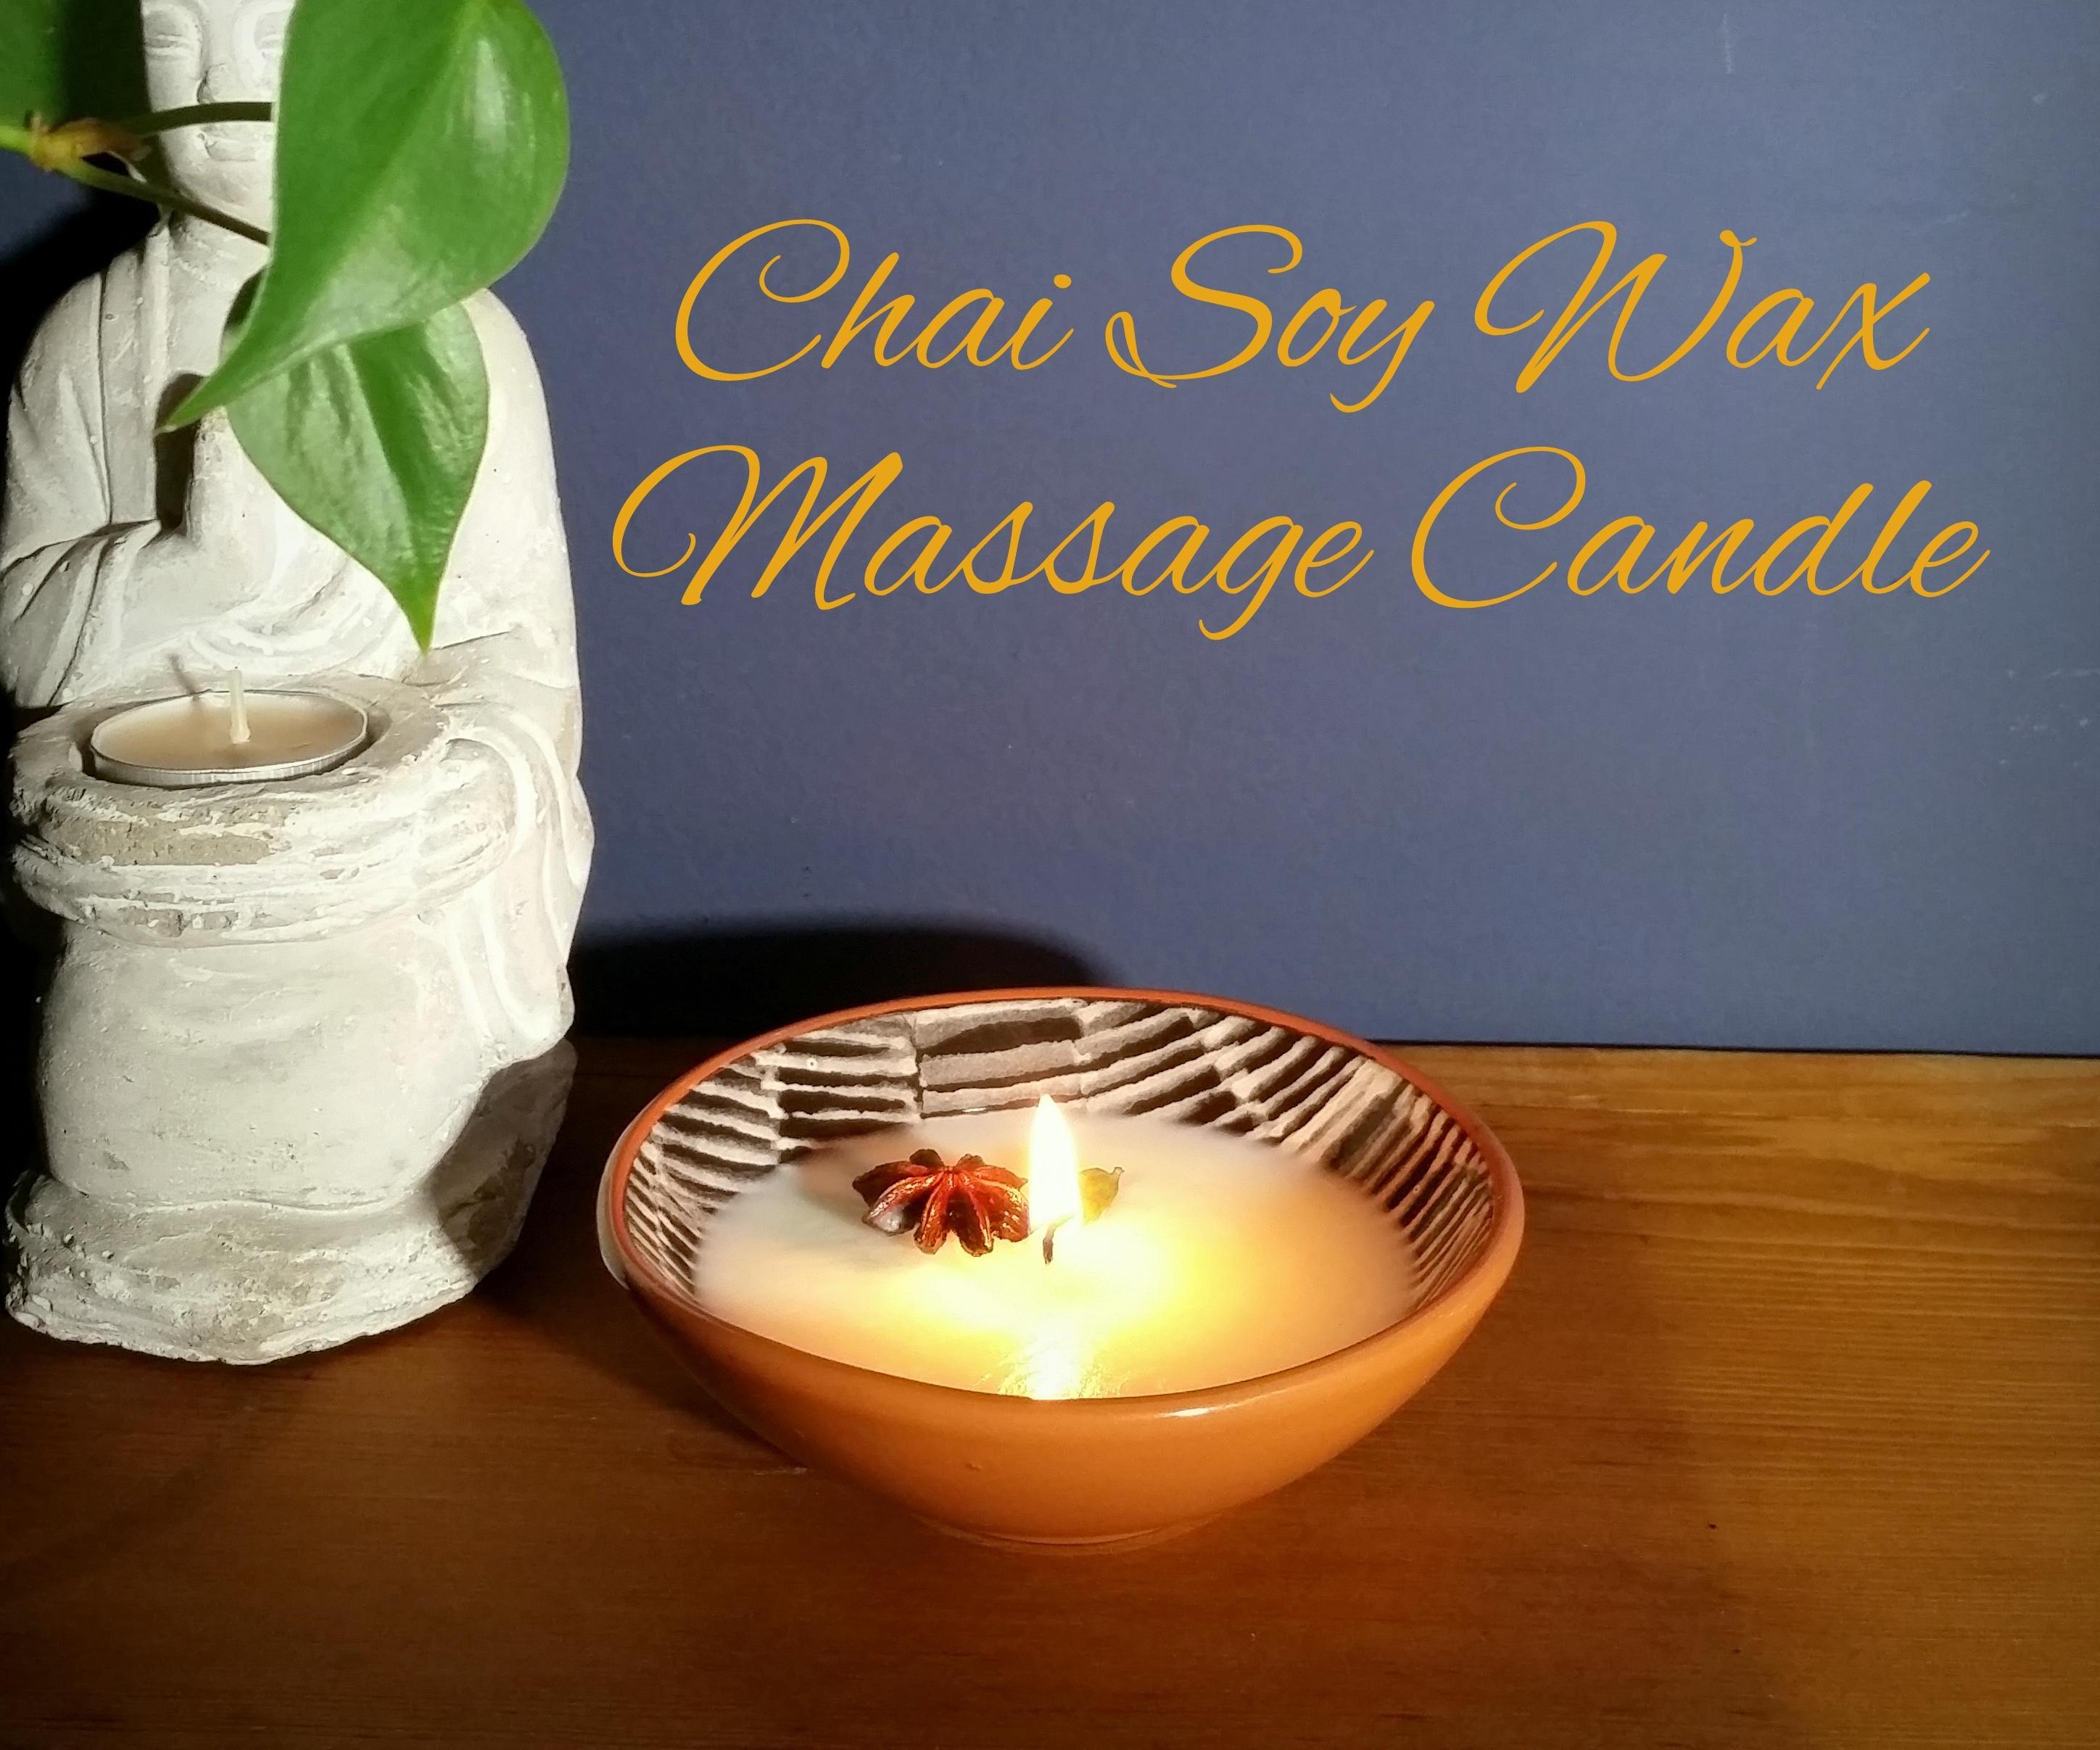 Chai Soy Wax Massage Candle